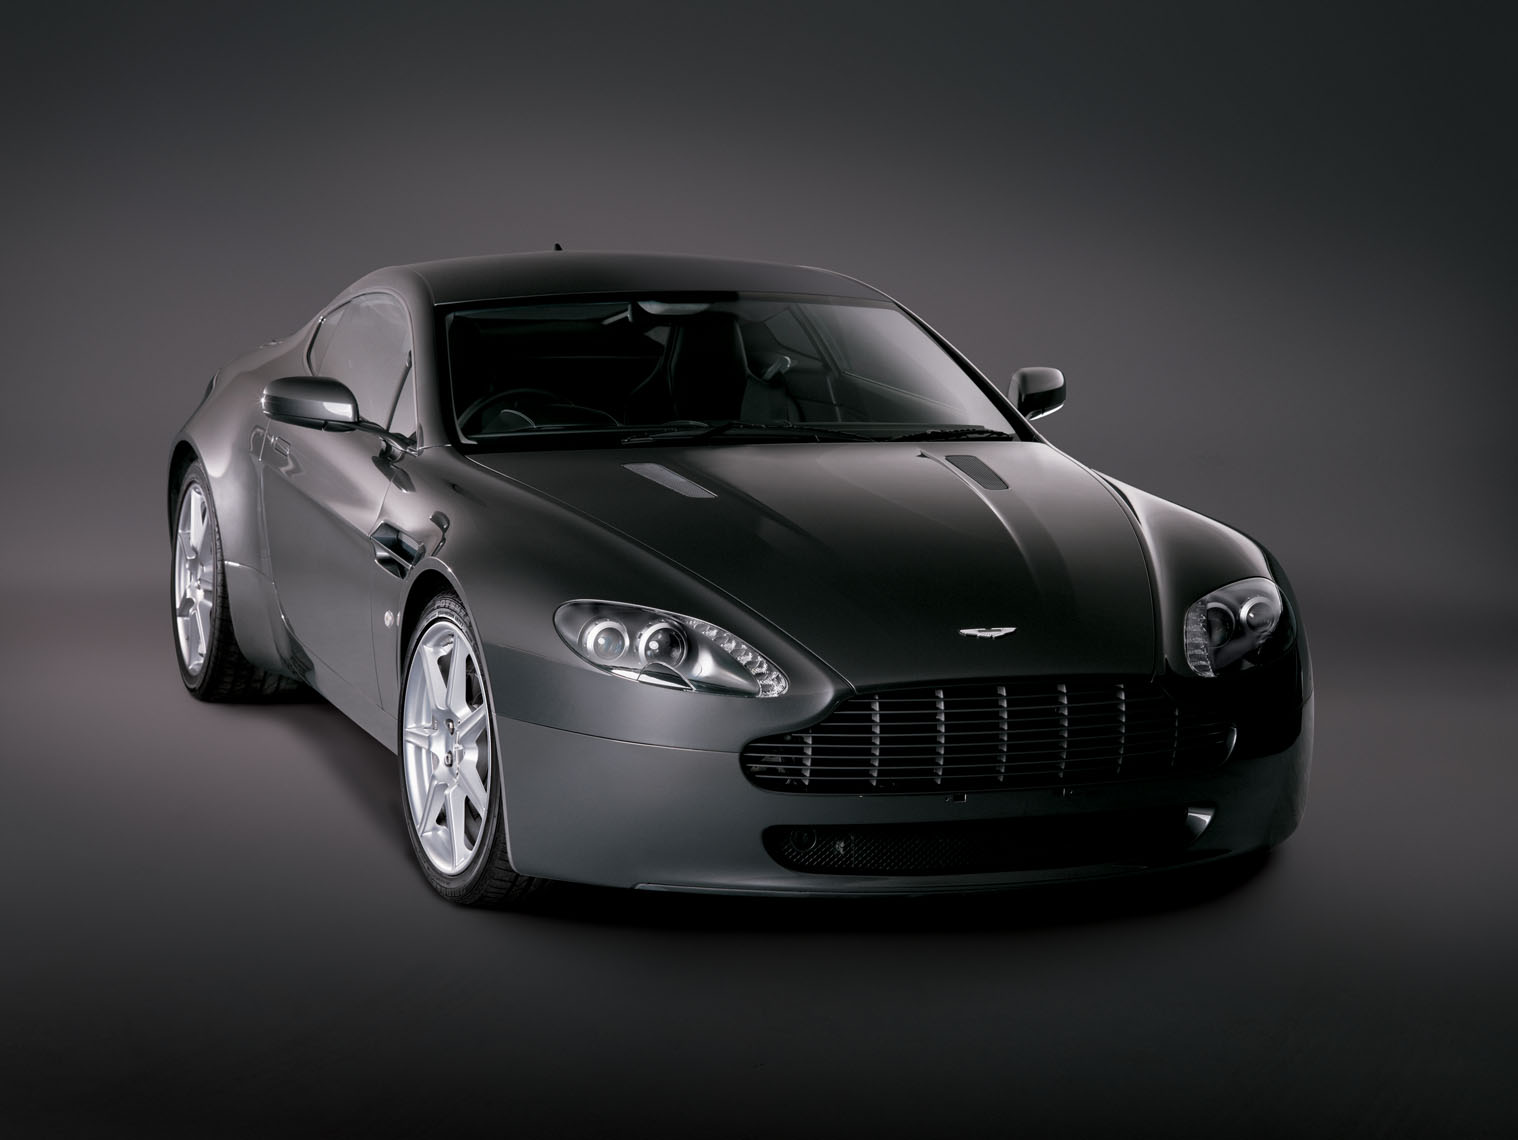 Grey Aston Martin studio photograph.